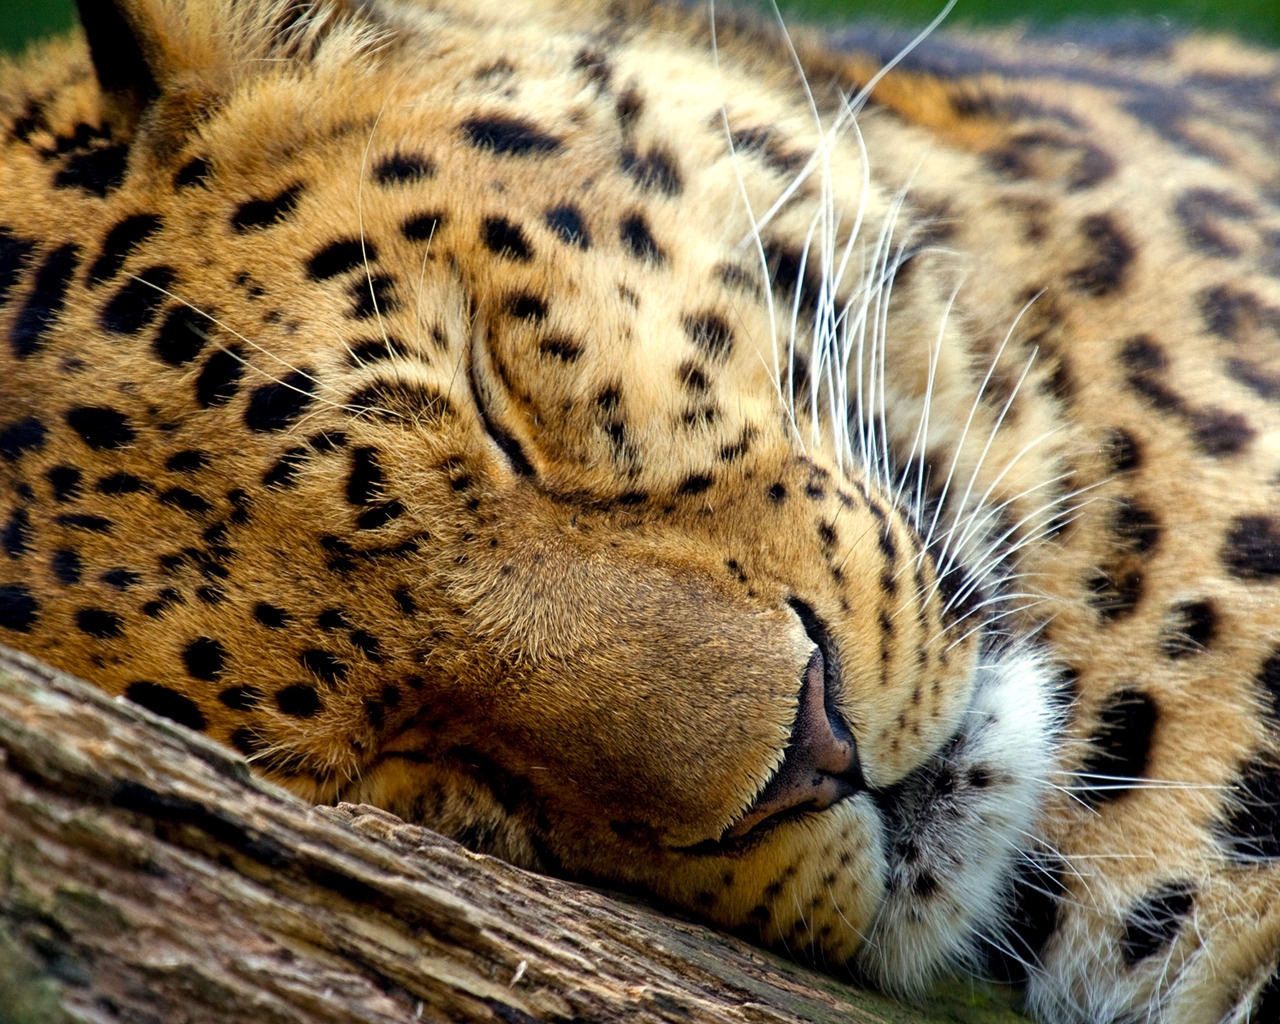 Cute Leopard Sleeping for 1280 x 1024 resolution